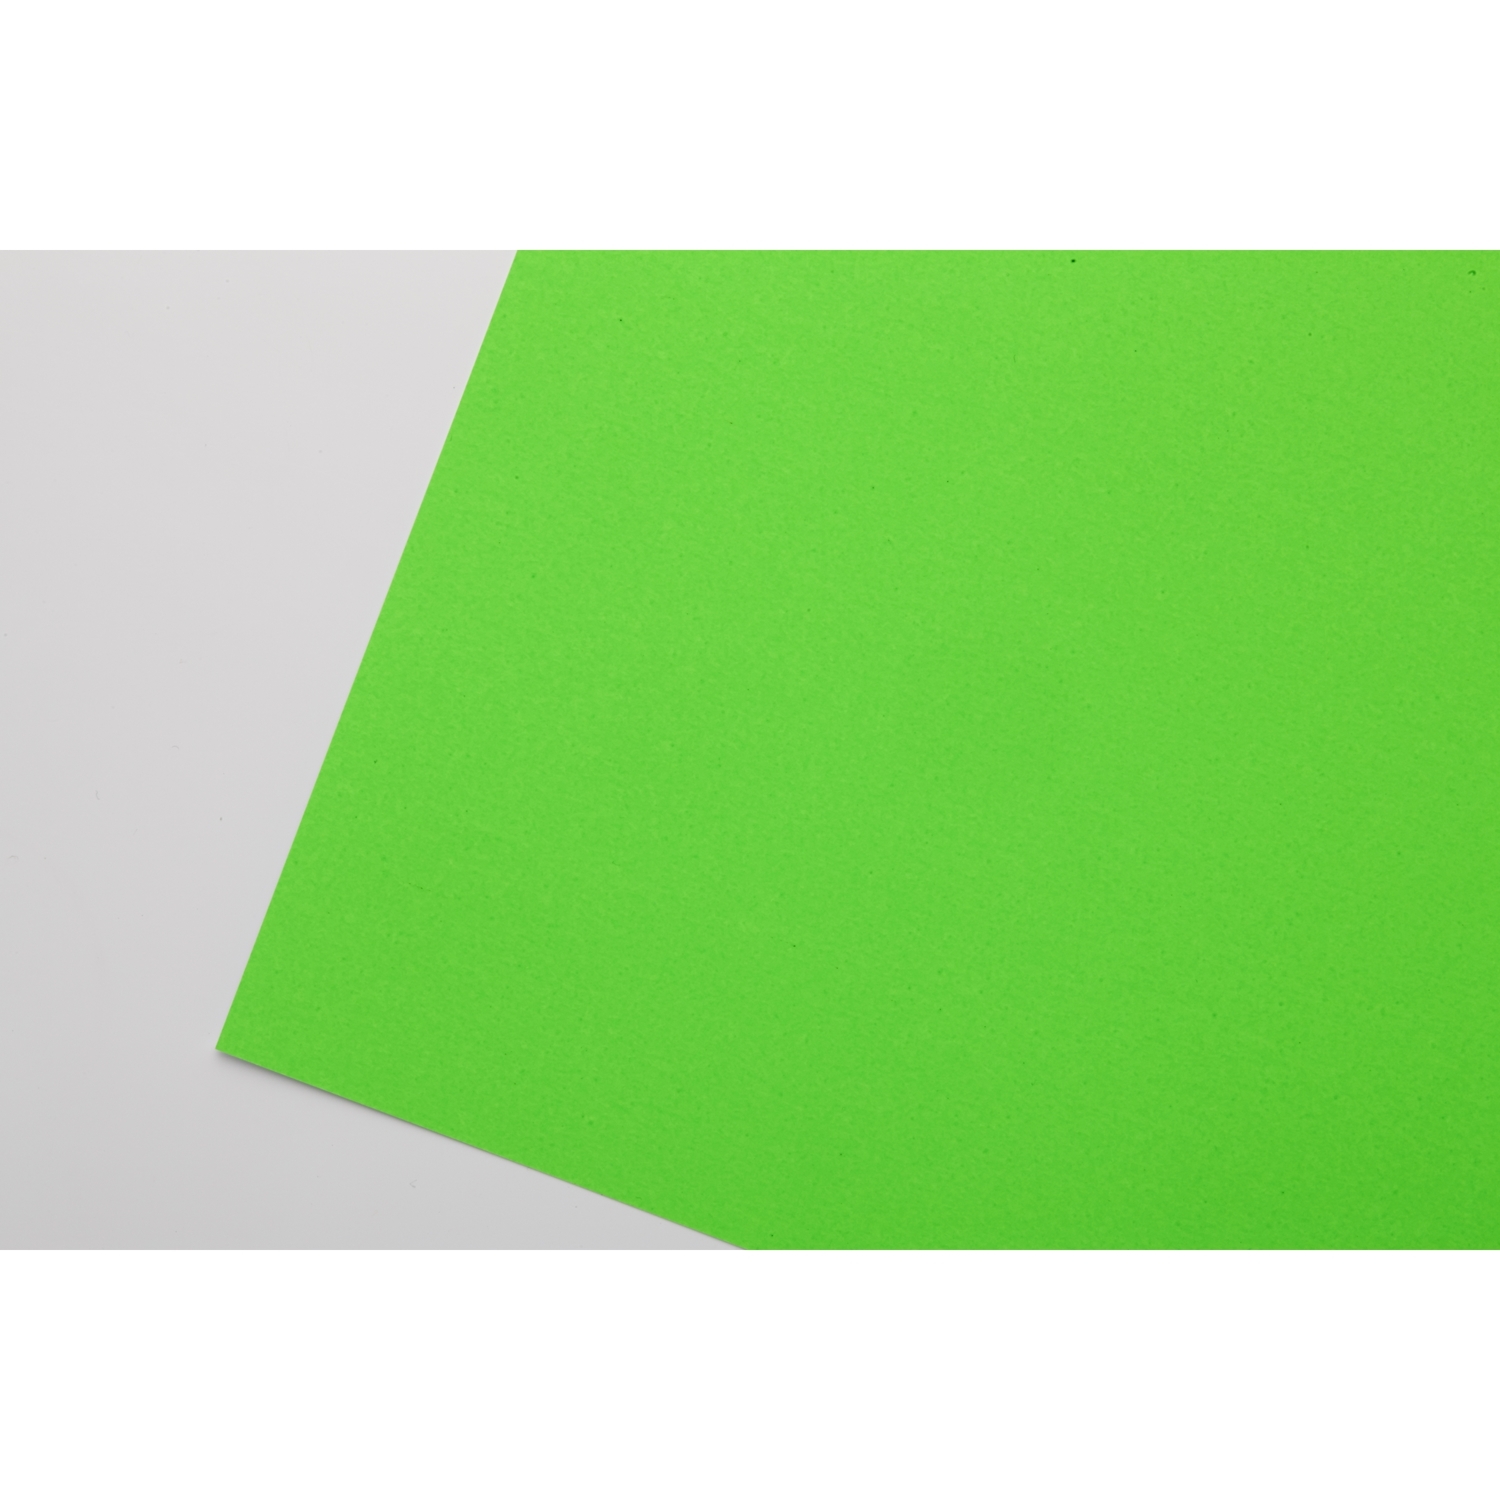 Slater Harrison Colourcard - Fluorescent Green Image